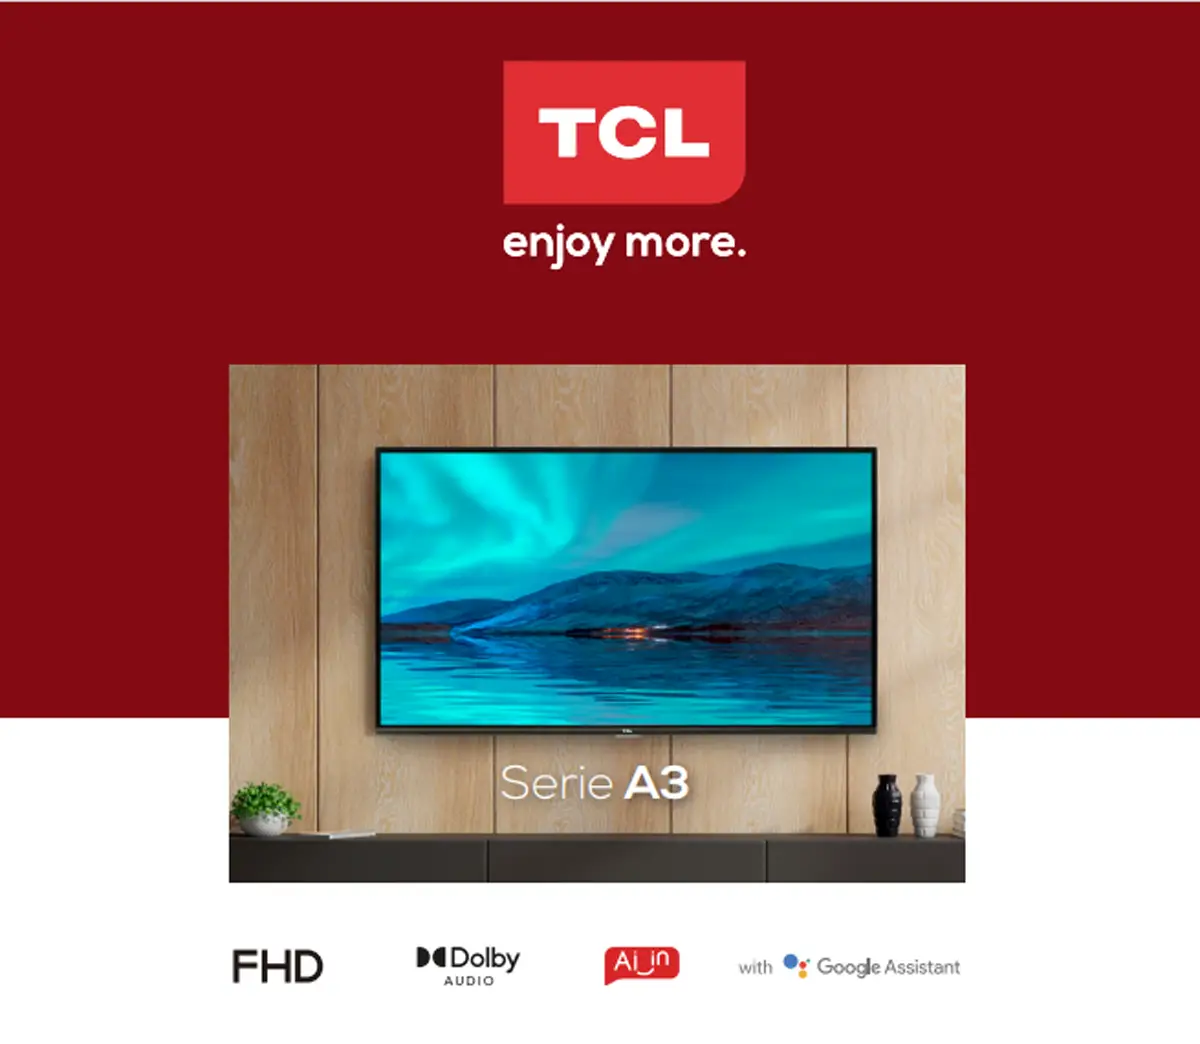 Tv 40 Pulgadas TCL Smart Tv FULL HD 40A345 Android TV LED